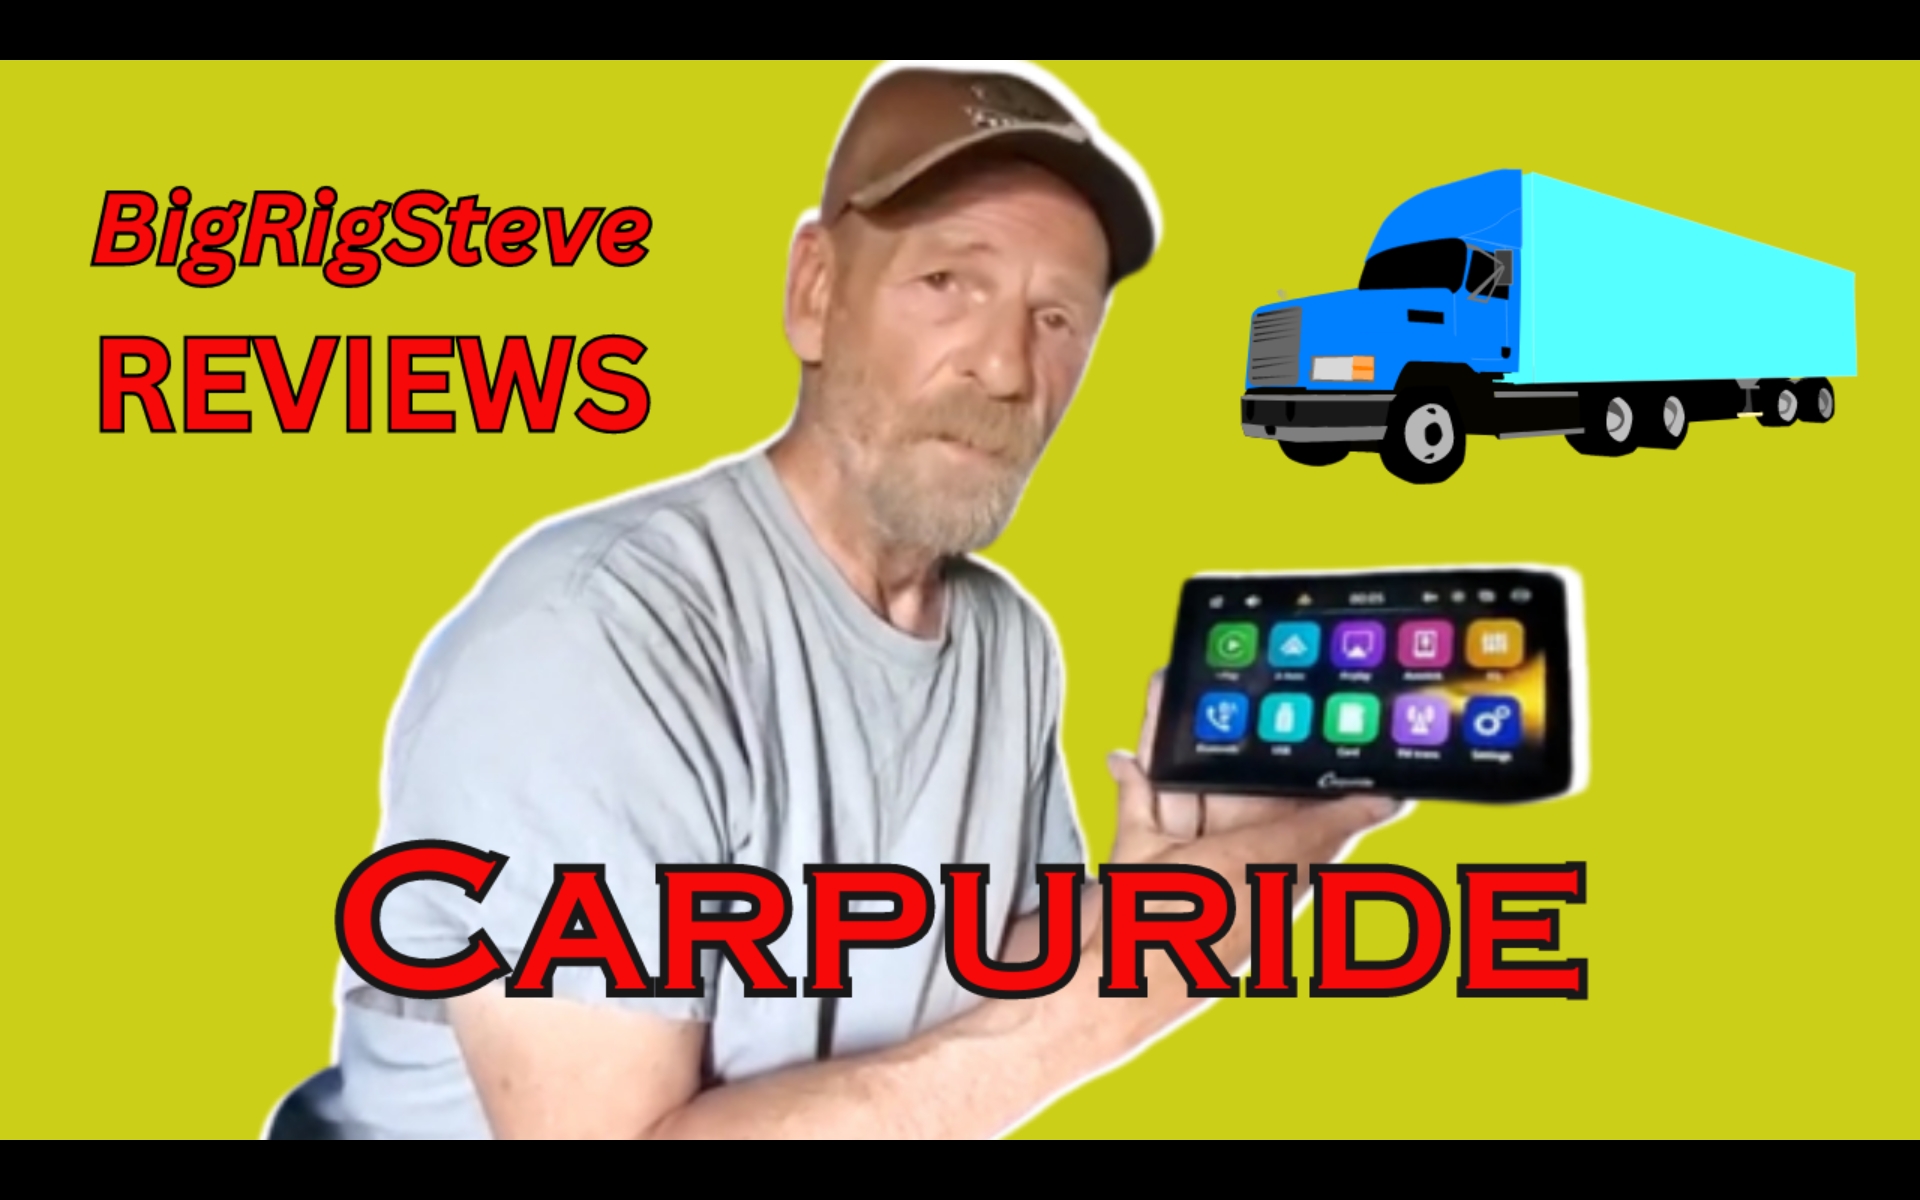 BigRigSteve reviews the W901 CARPURIDE Wireless Portable Car